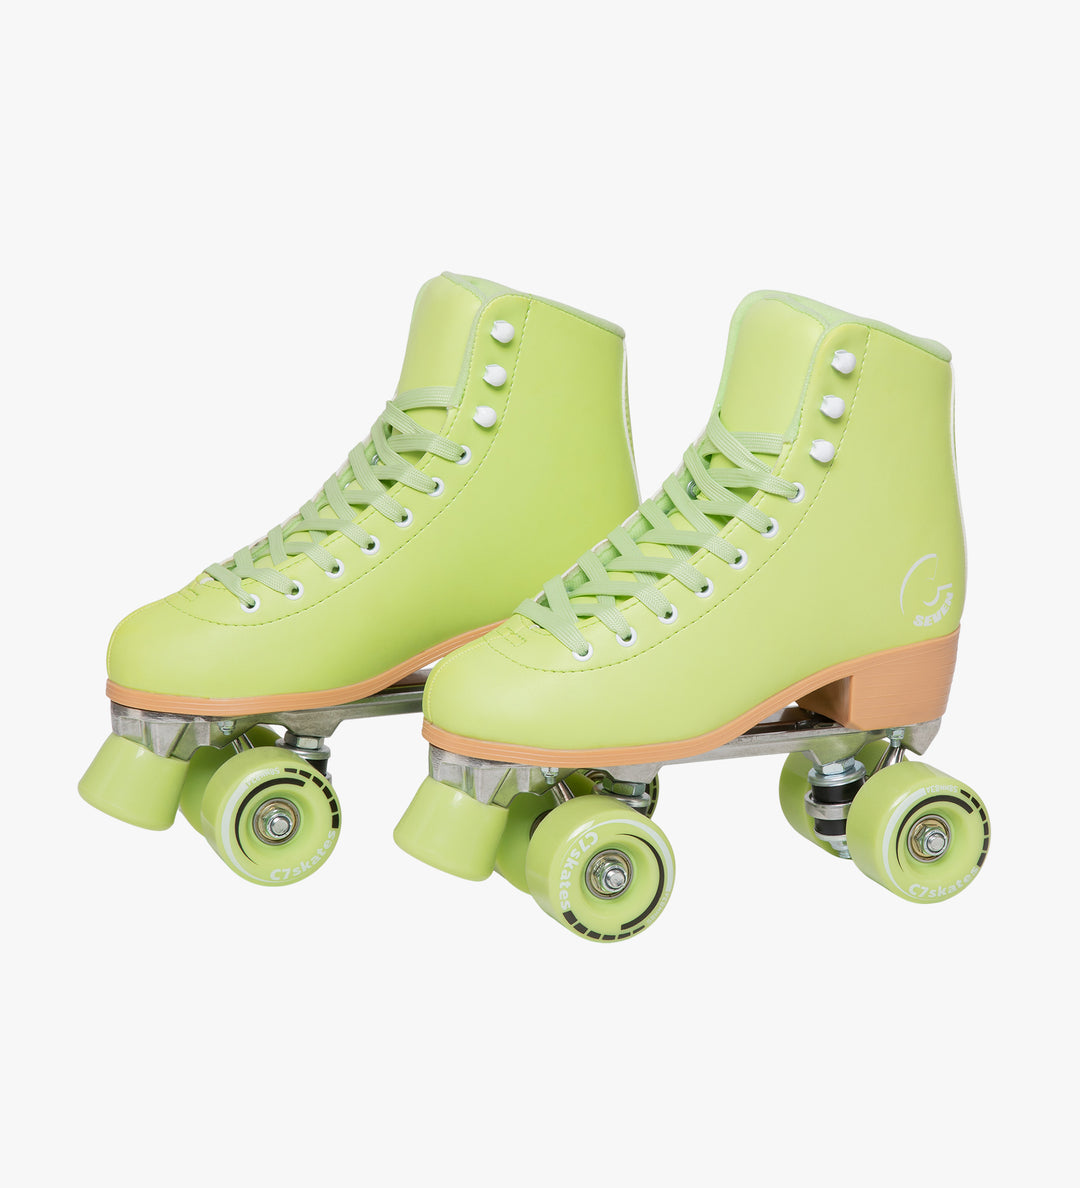 C7skates C7 Matcha green boot quad roller skates for women girls men with outdoor 58mm wheels 